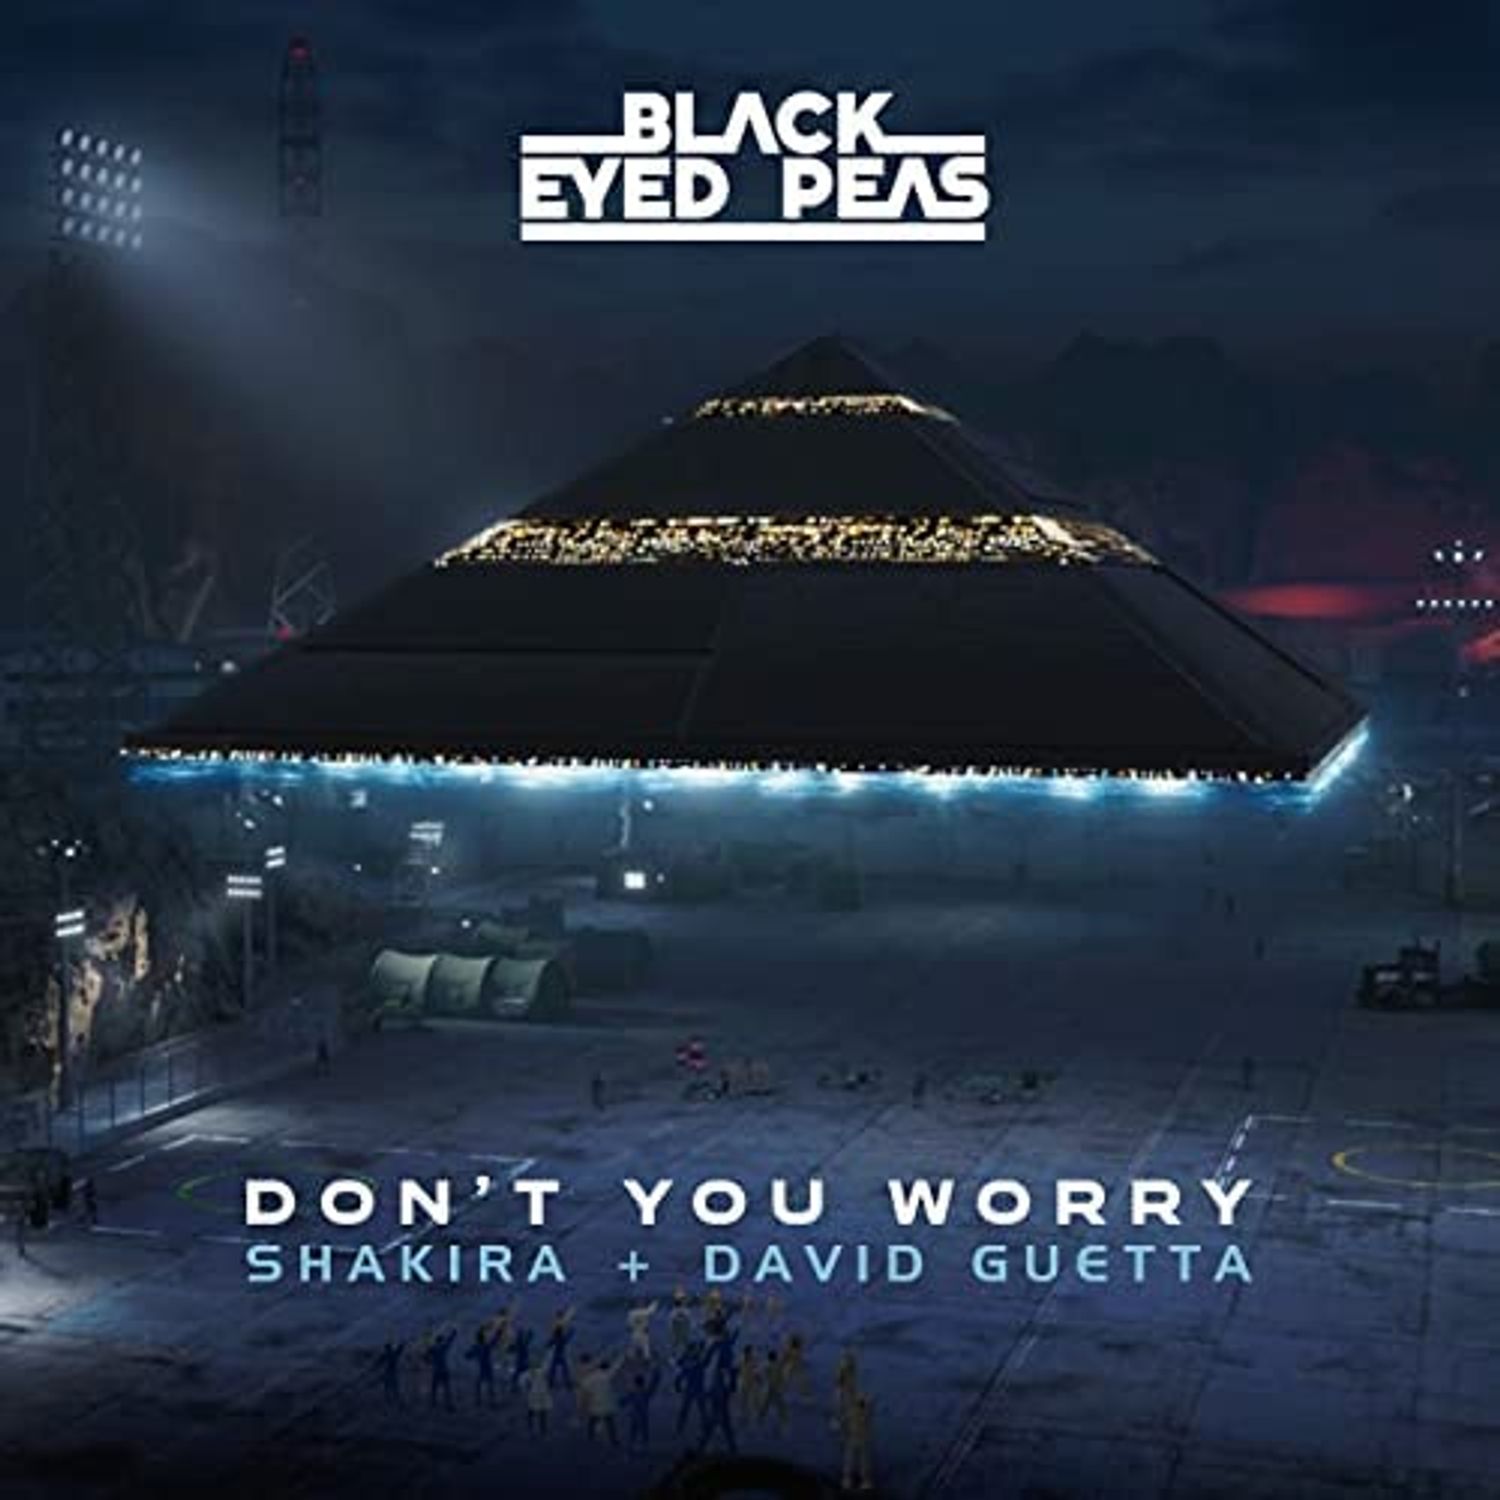 Black Eyed Peas, David Guetta, Shakira - Don't You Worry